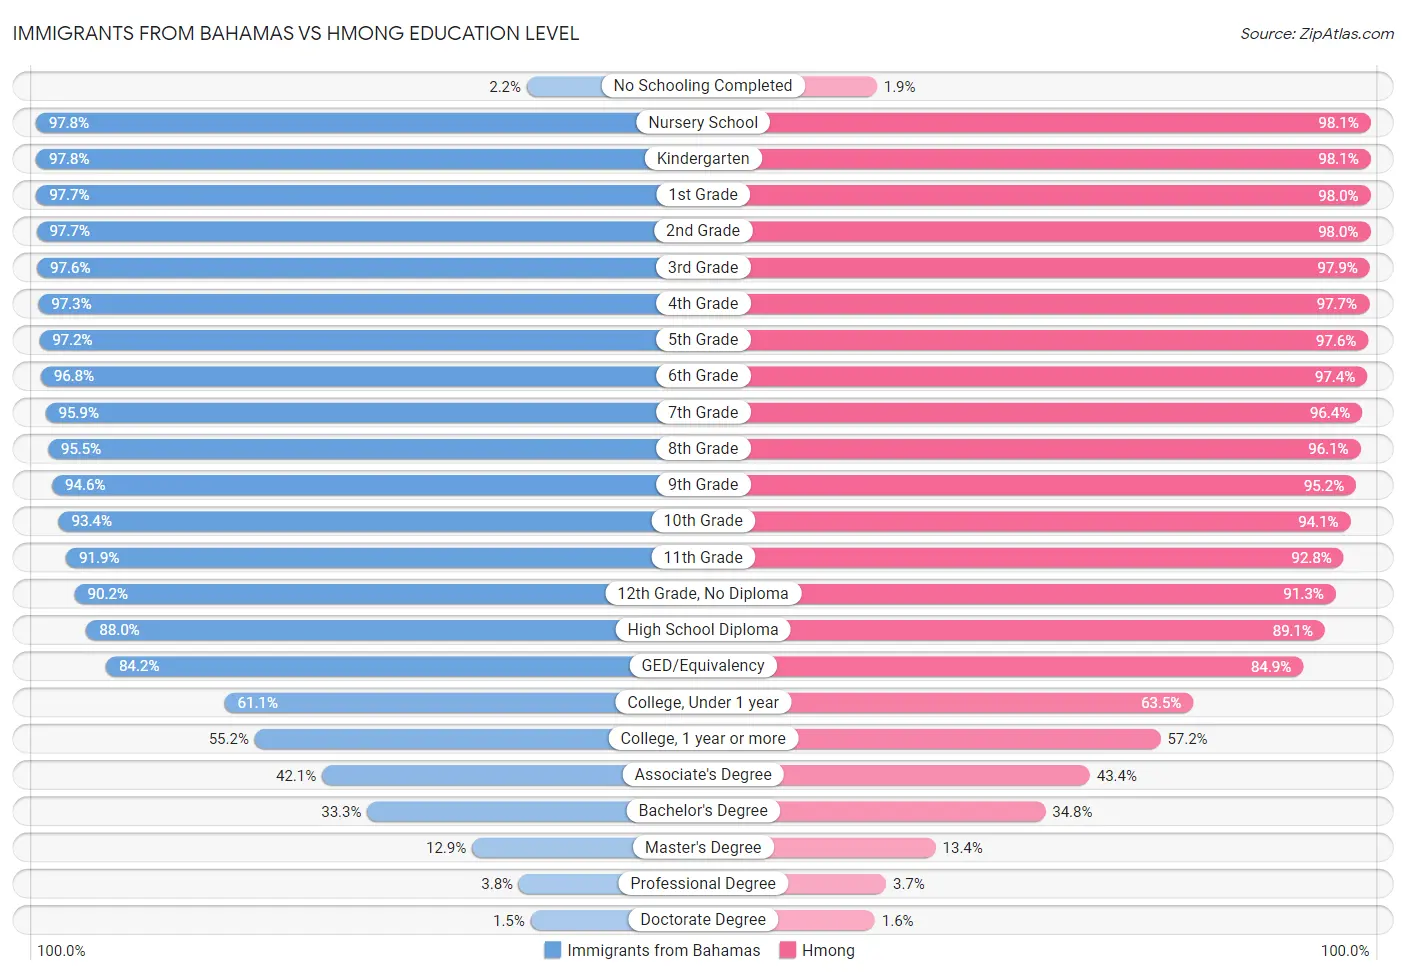 Immigrants from Bahamas vs Hmong Education Level